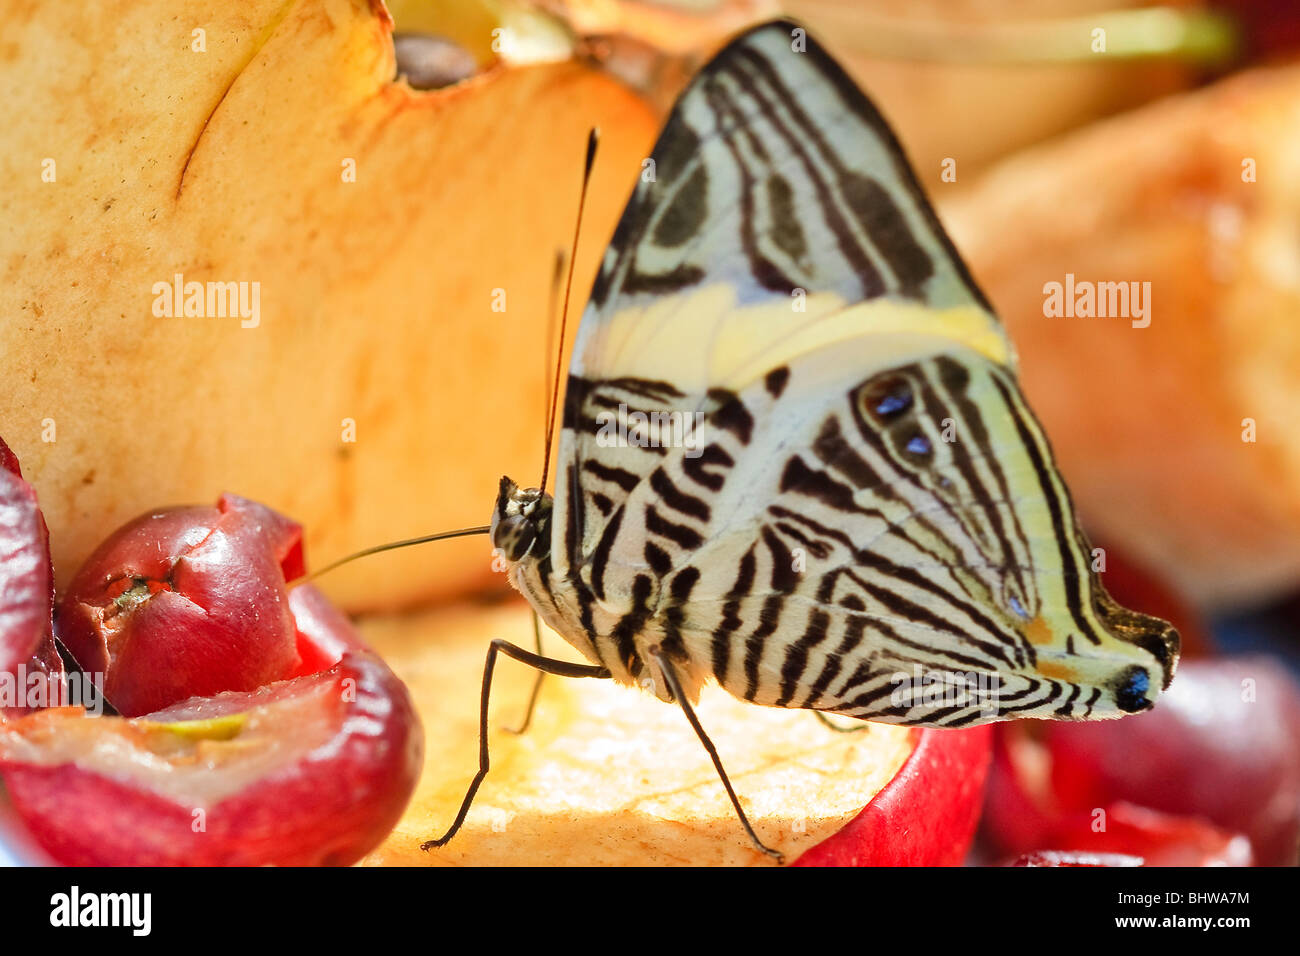 Zebra Mosaic Butterfly Stock Photo